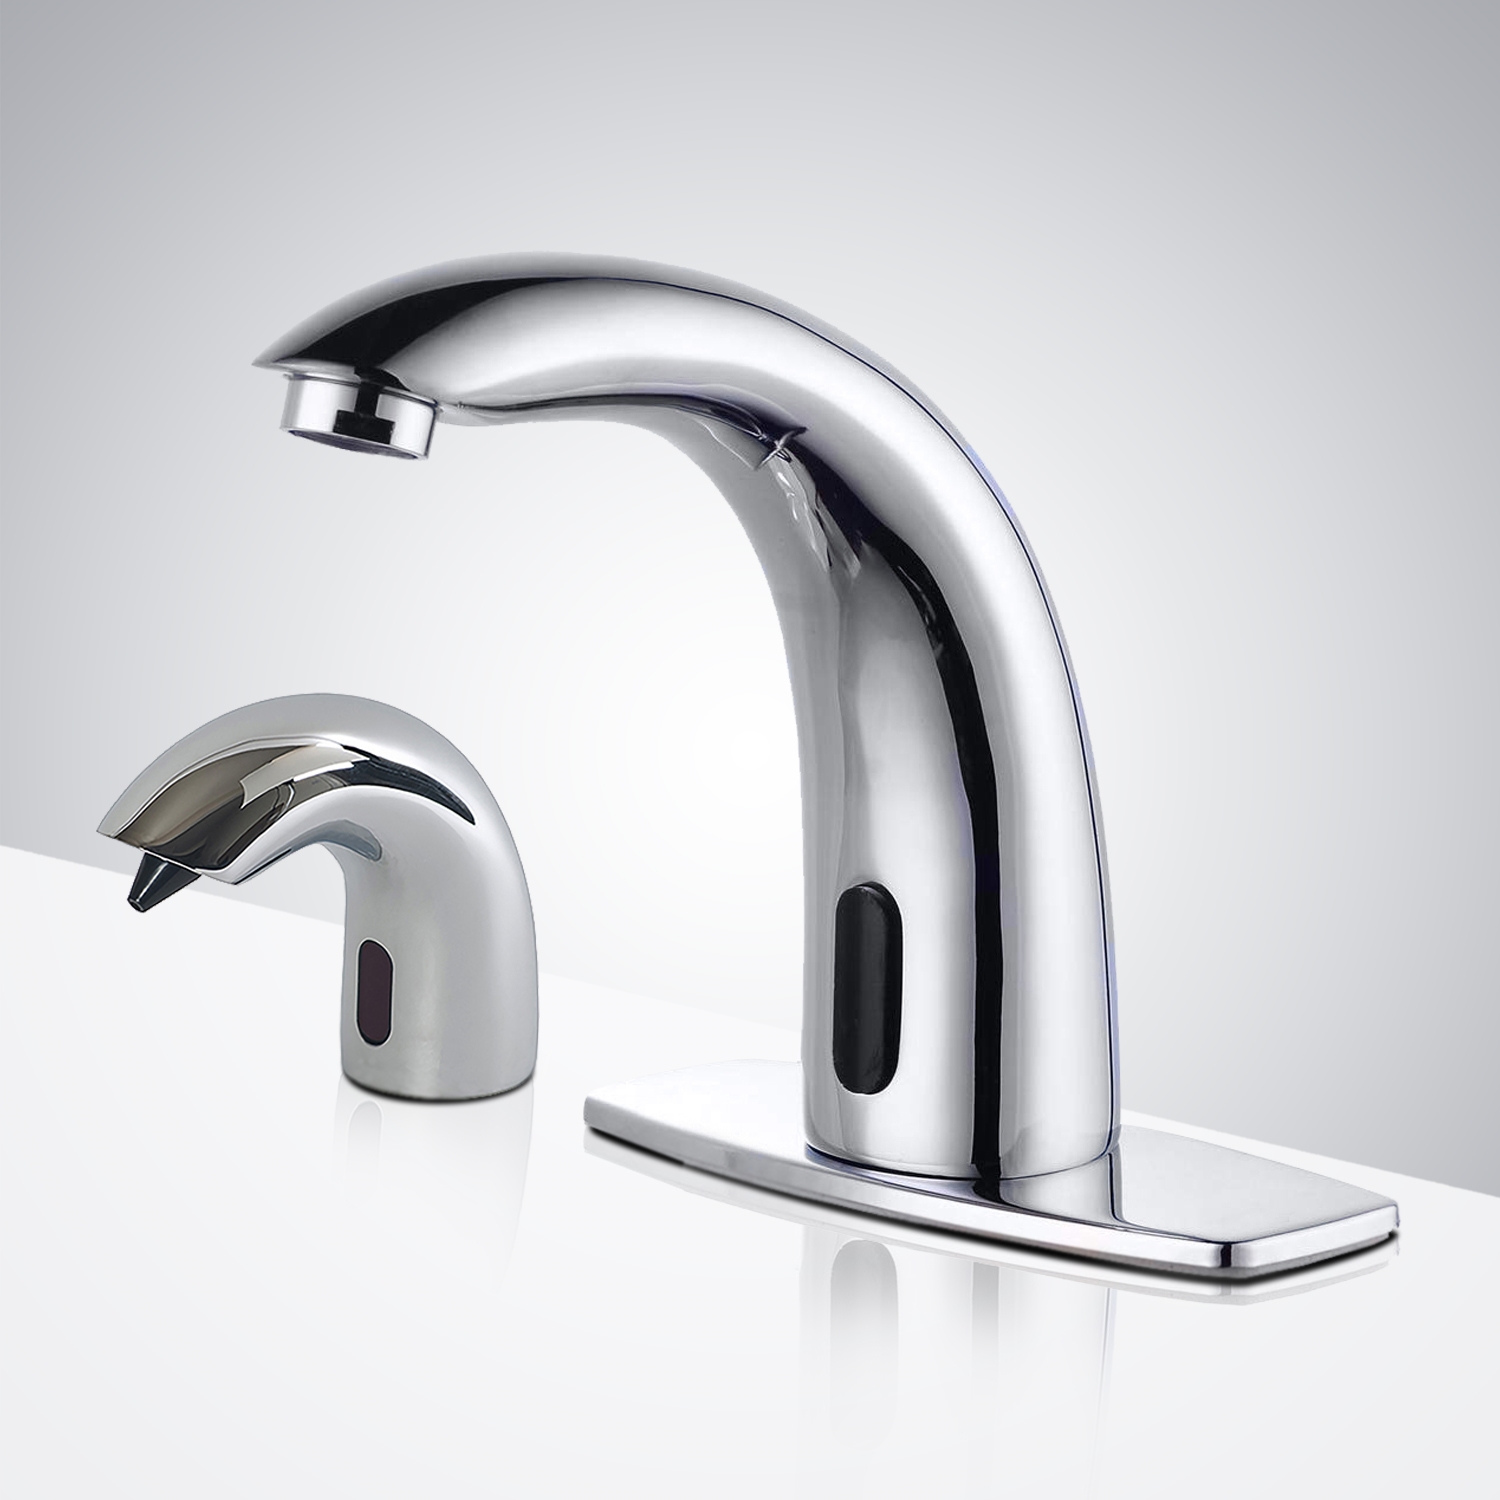 Fontana Dax Motion Touchless Sensor Faucet & Automatic Liquid Foam Soap Dispenser for Restrooms